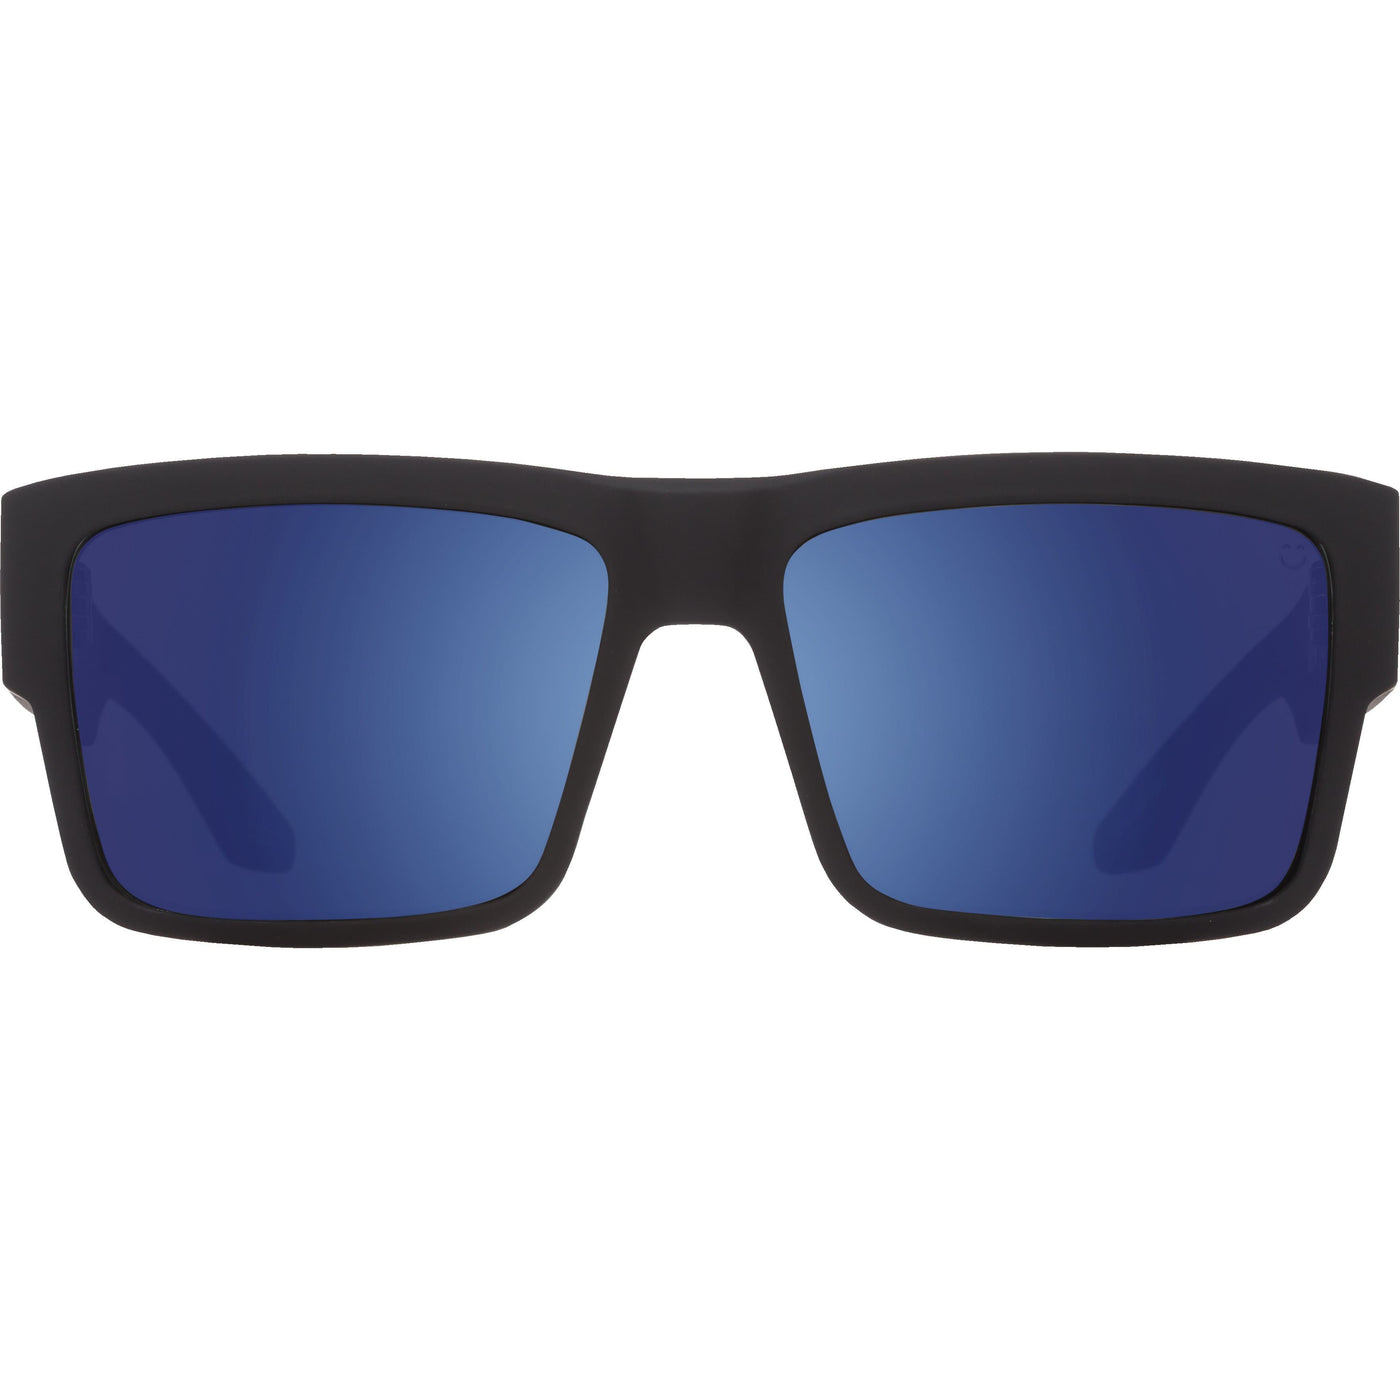 dark blue mirrored sunglasses - spy